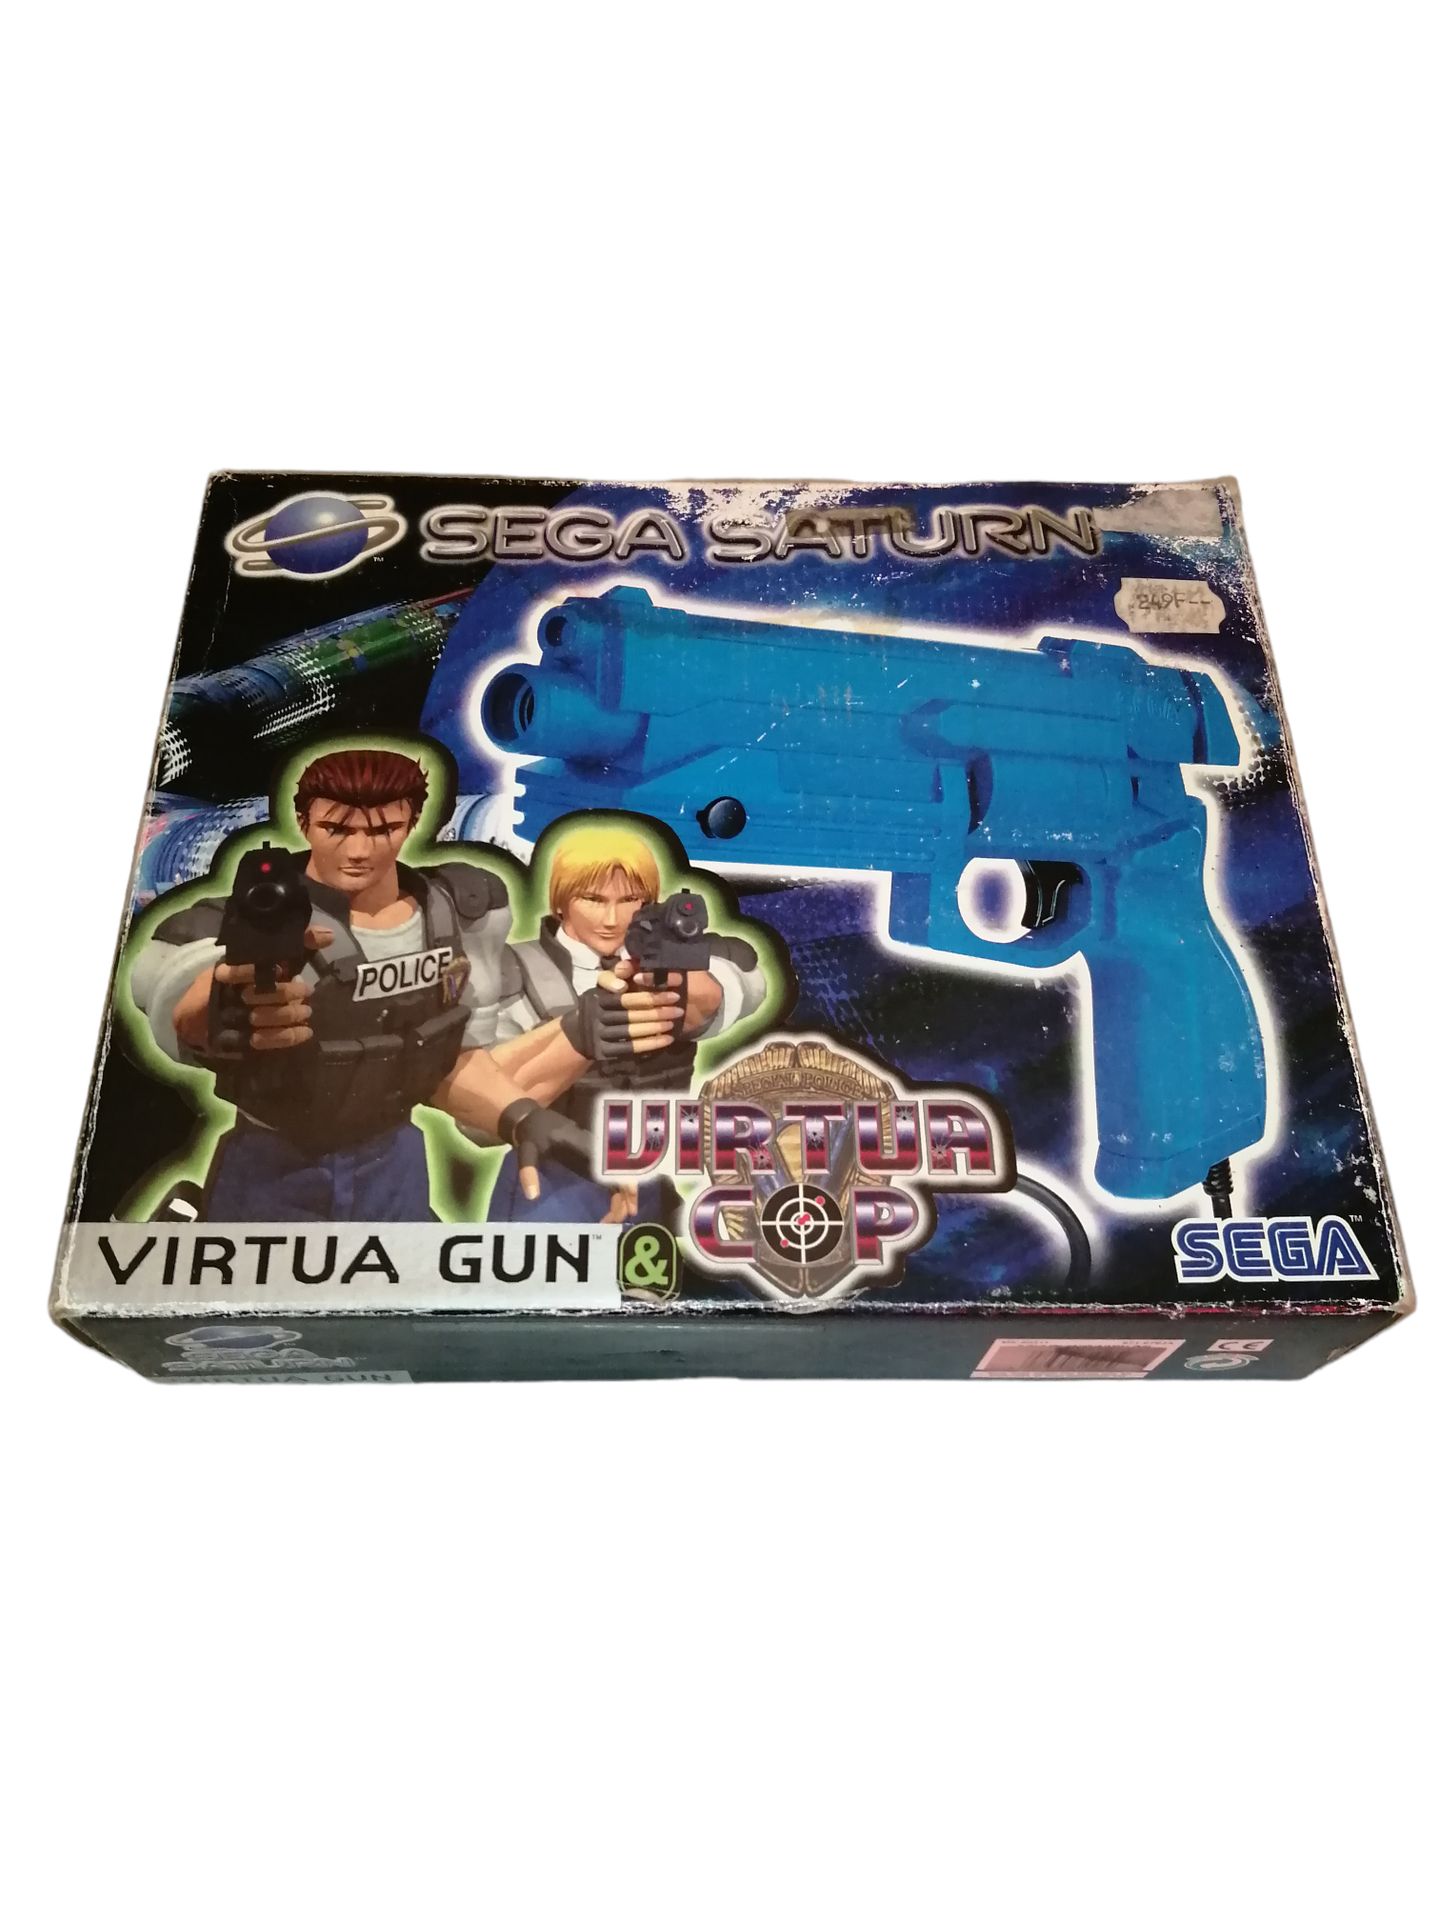 Null SEGA SATURN - Virtua Gun Virtua Cop.
Box in schlechtem Zustand,
Innenseite &hellip;